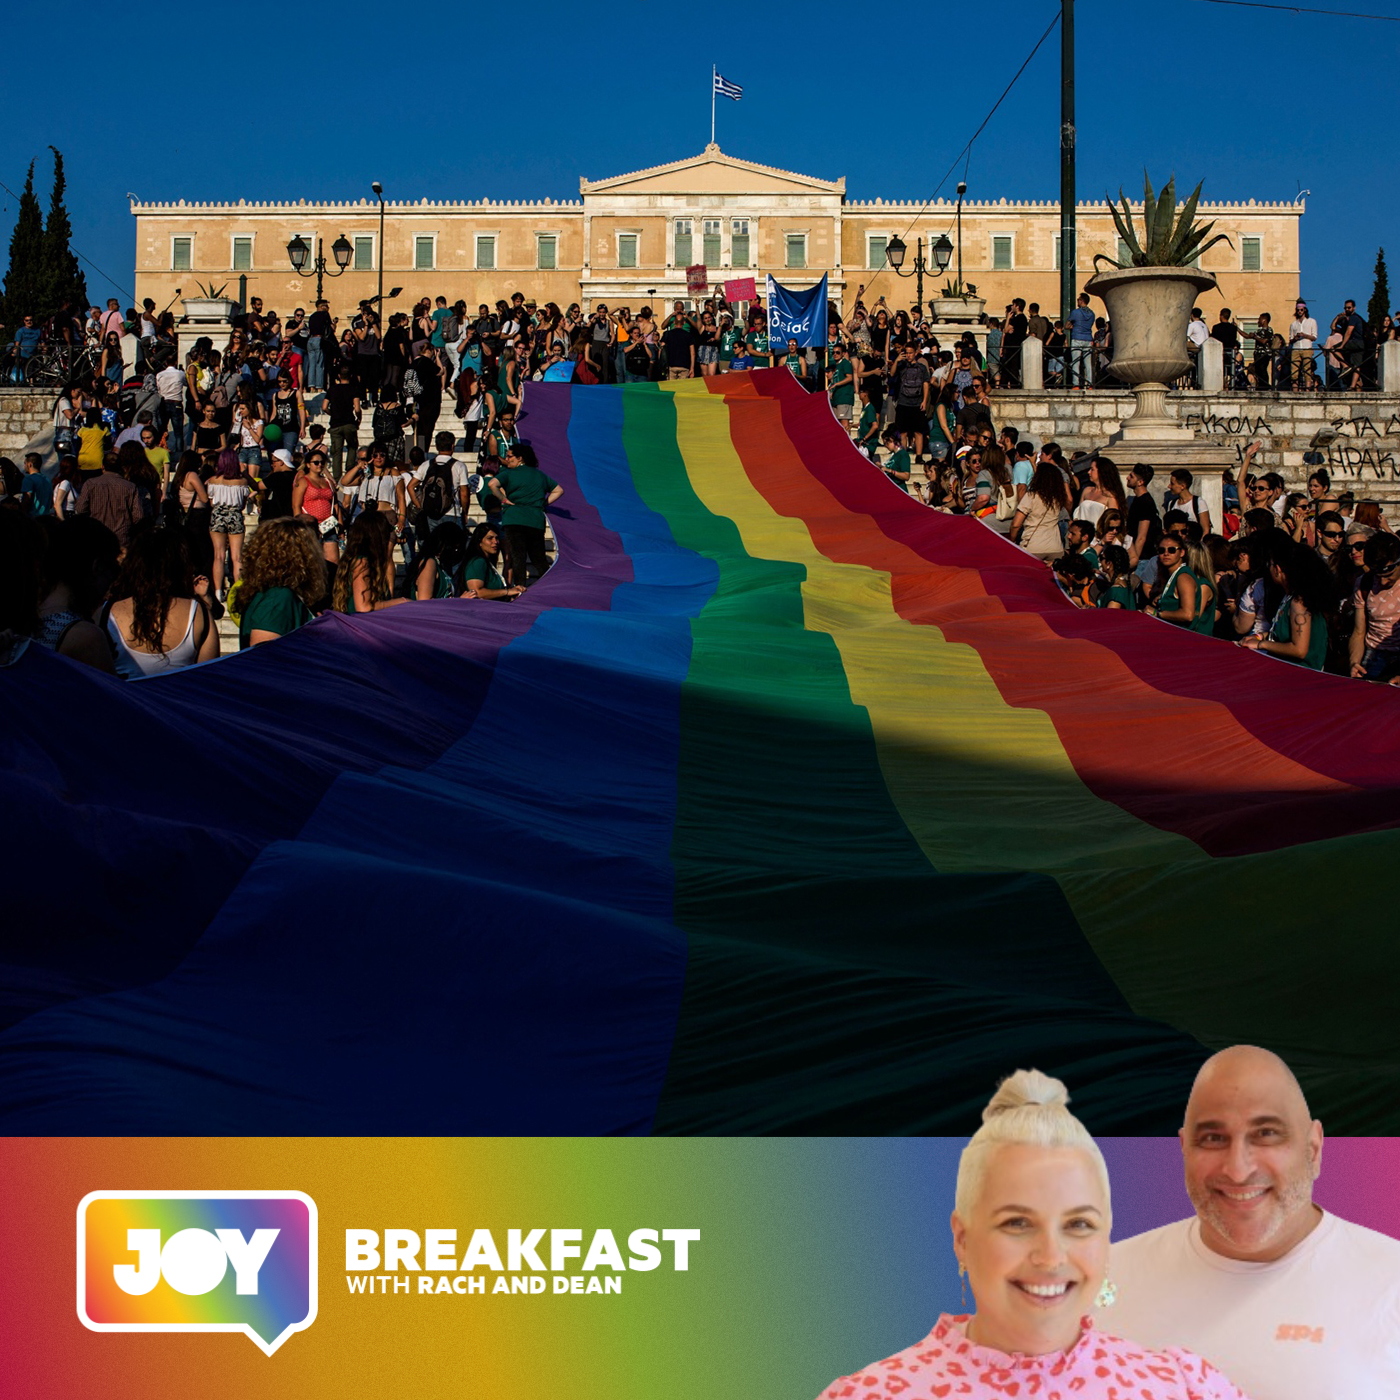 Greece legalises same sex marriage